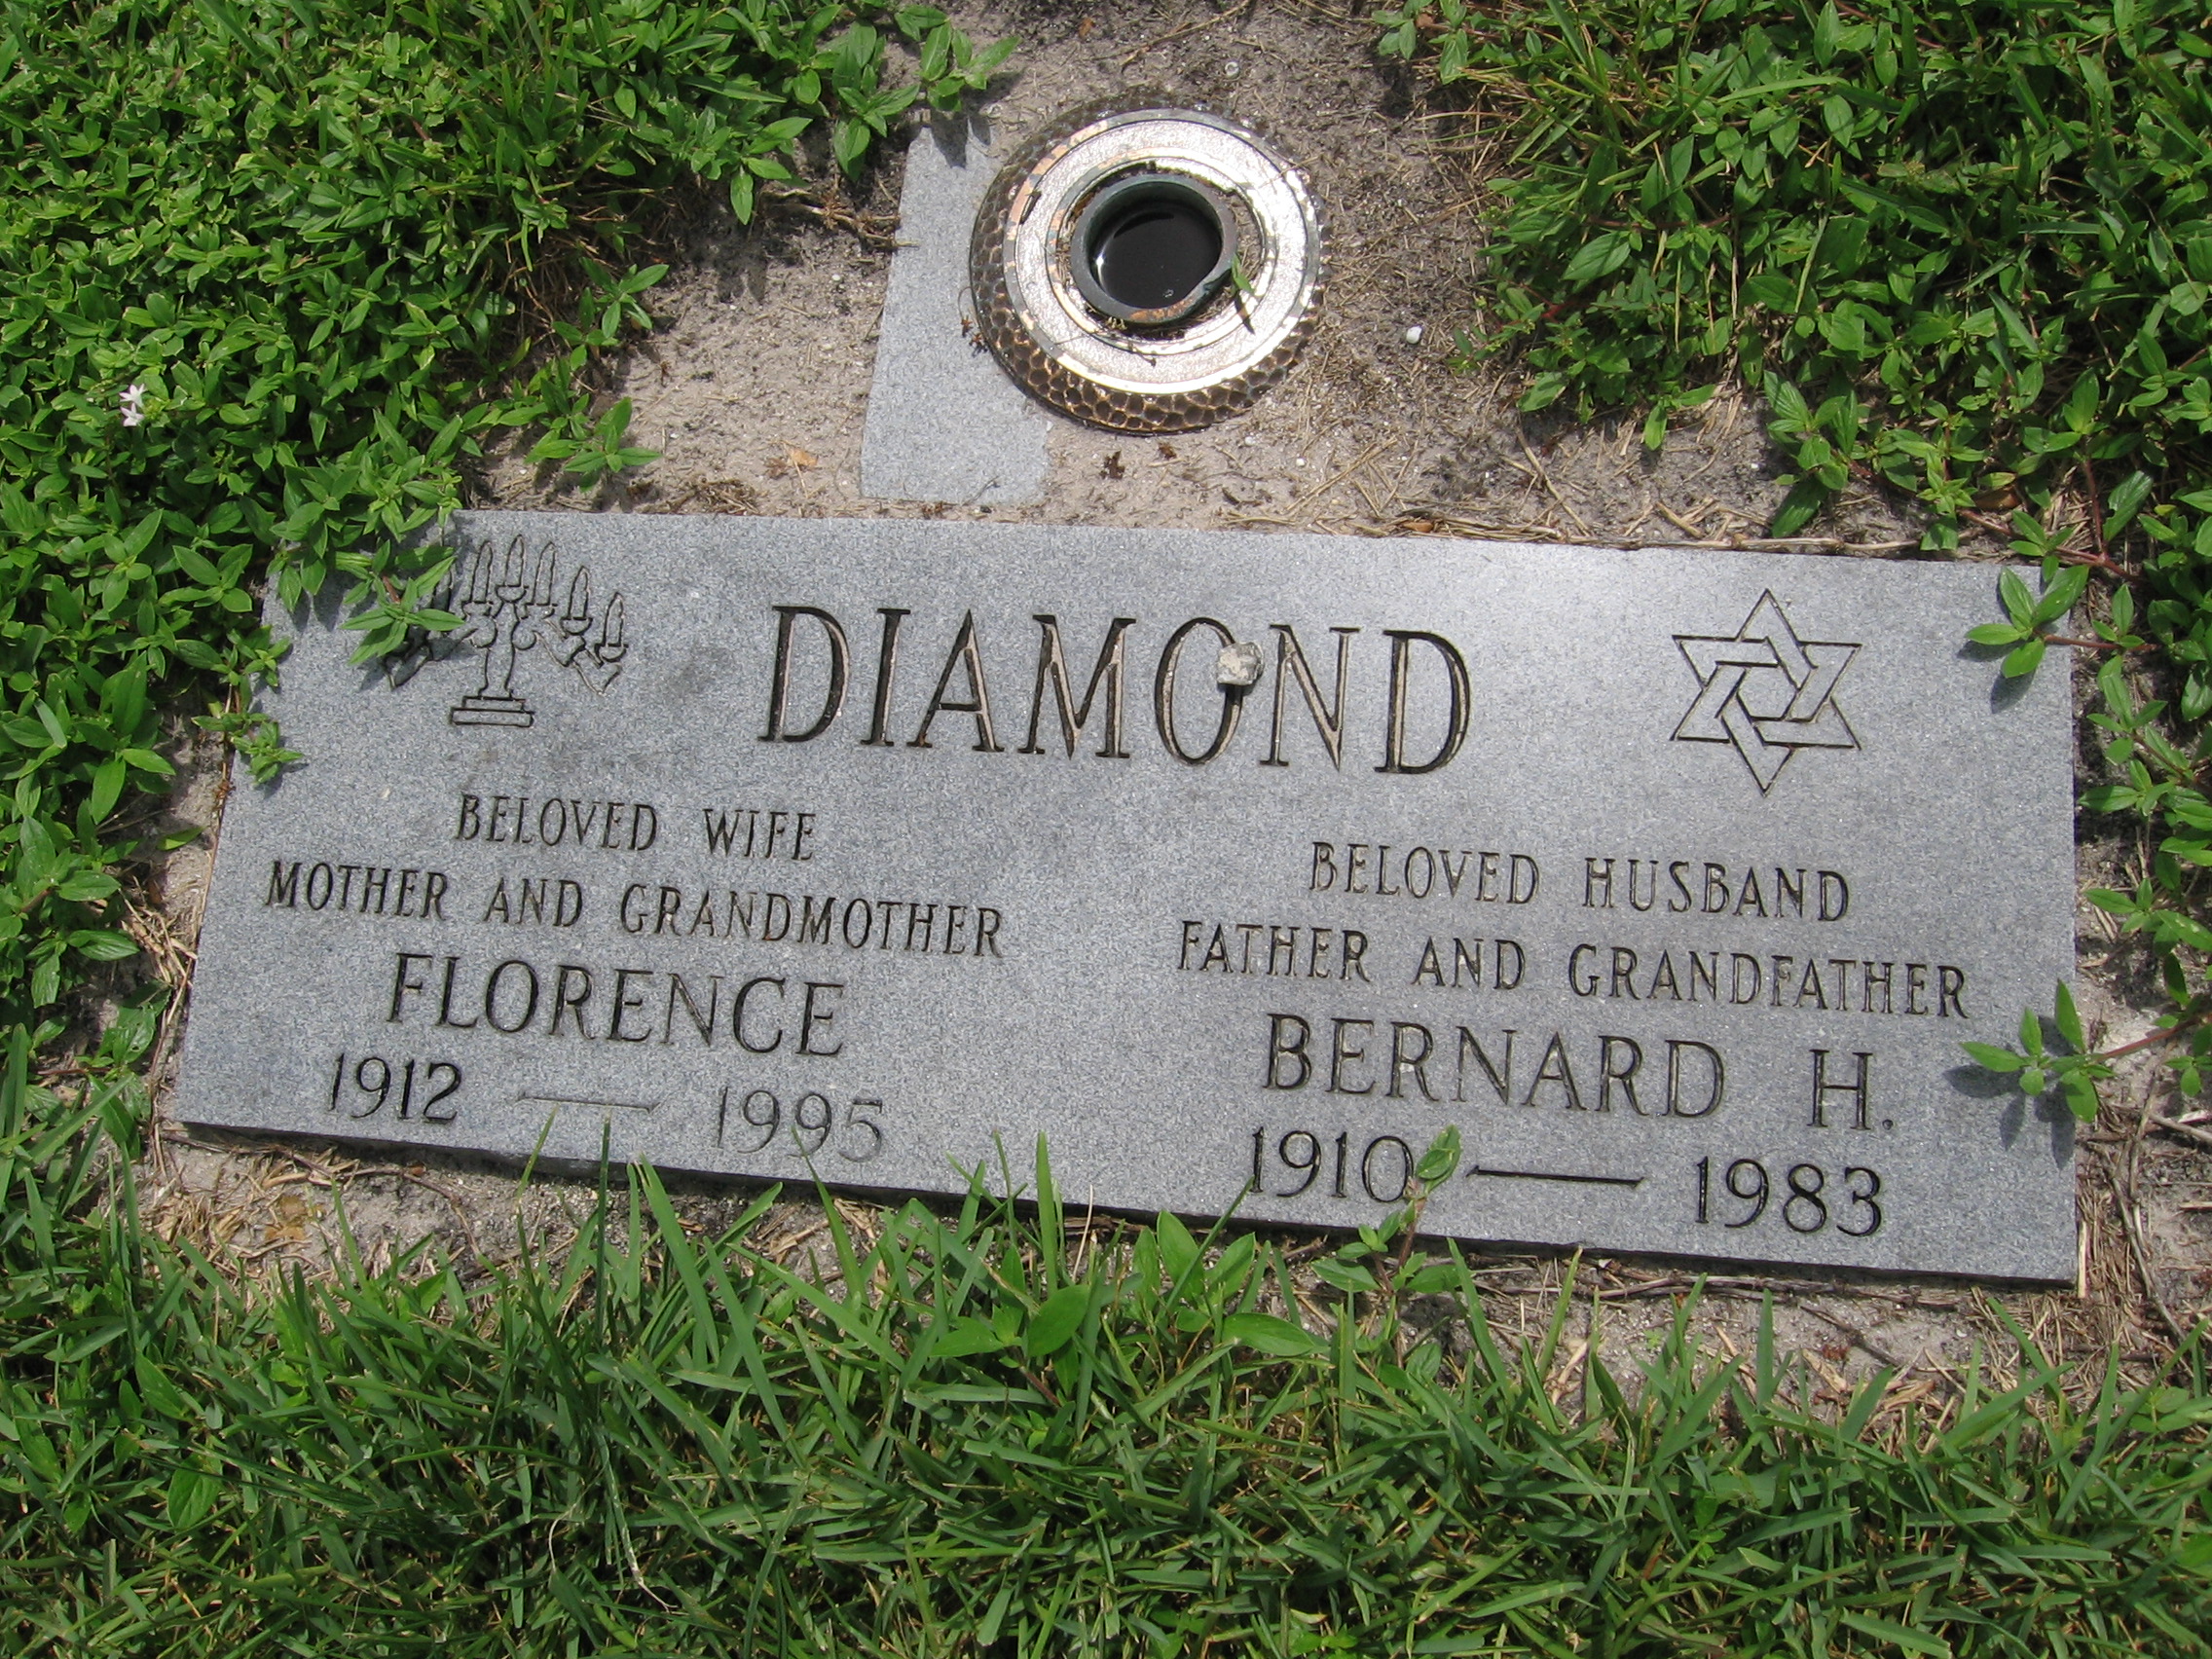 Bernard H Diamond